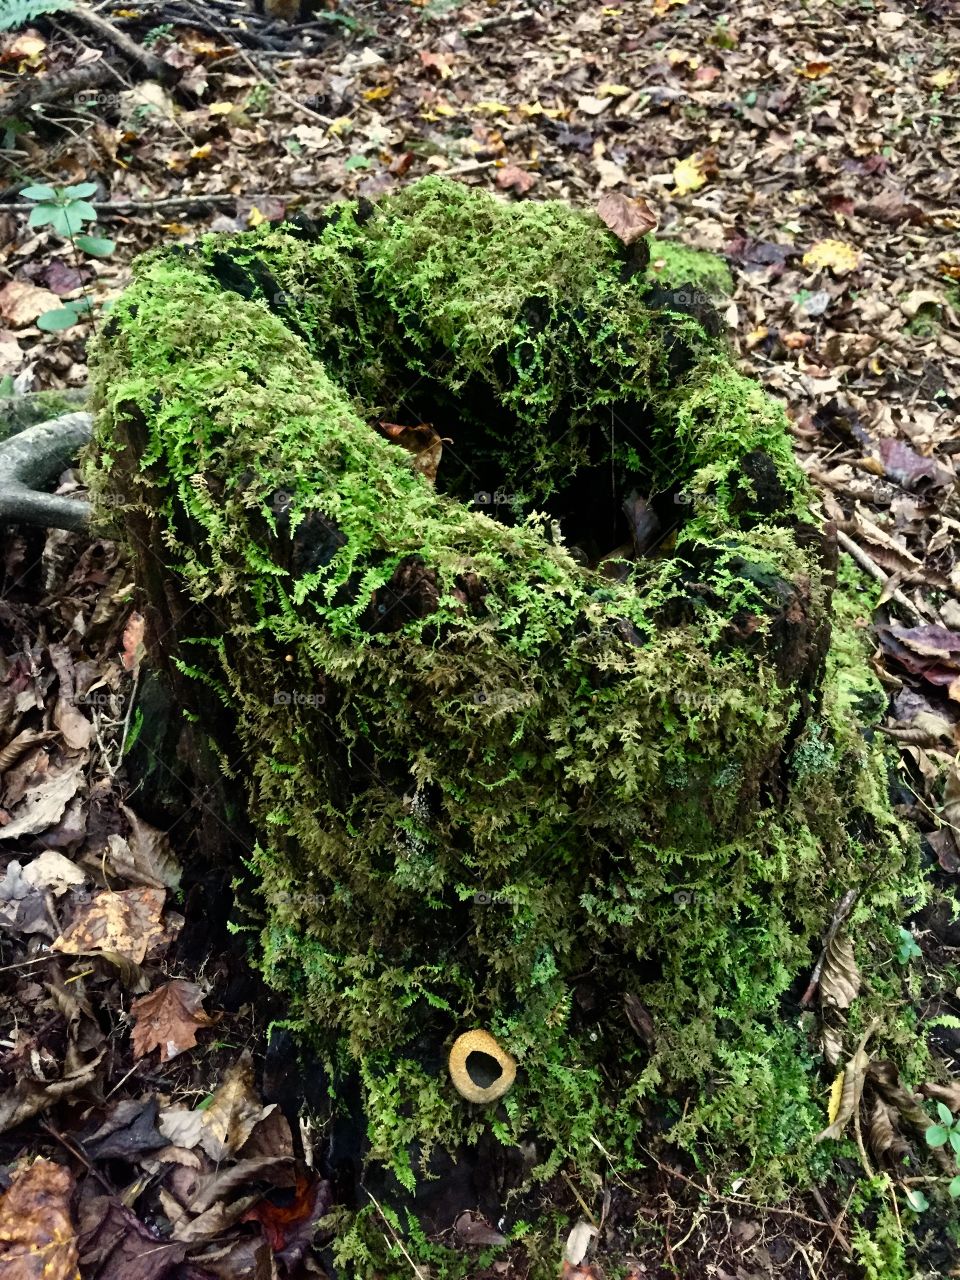 Mossy stump